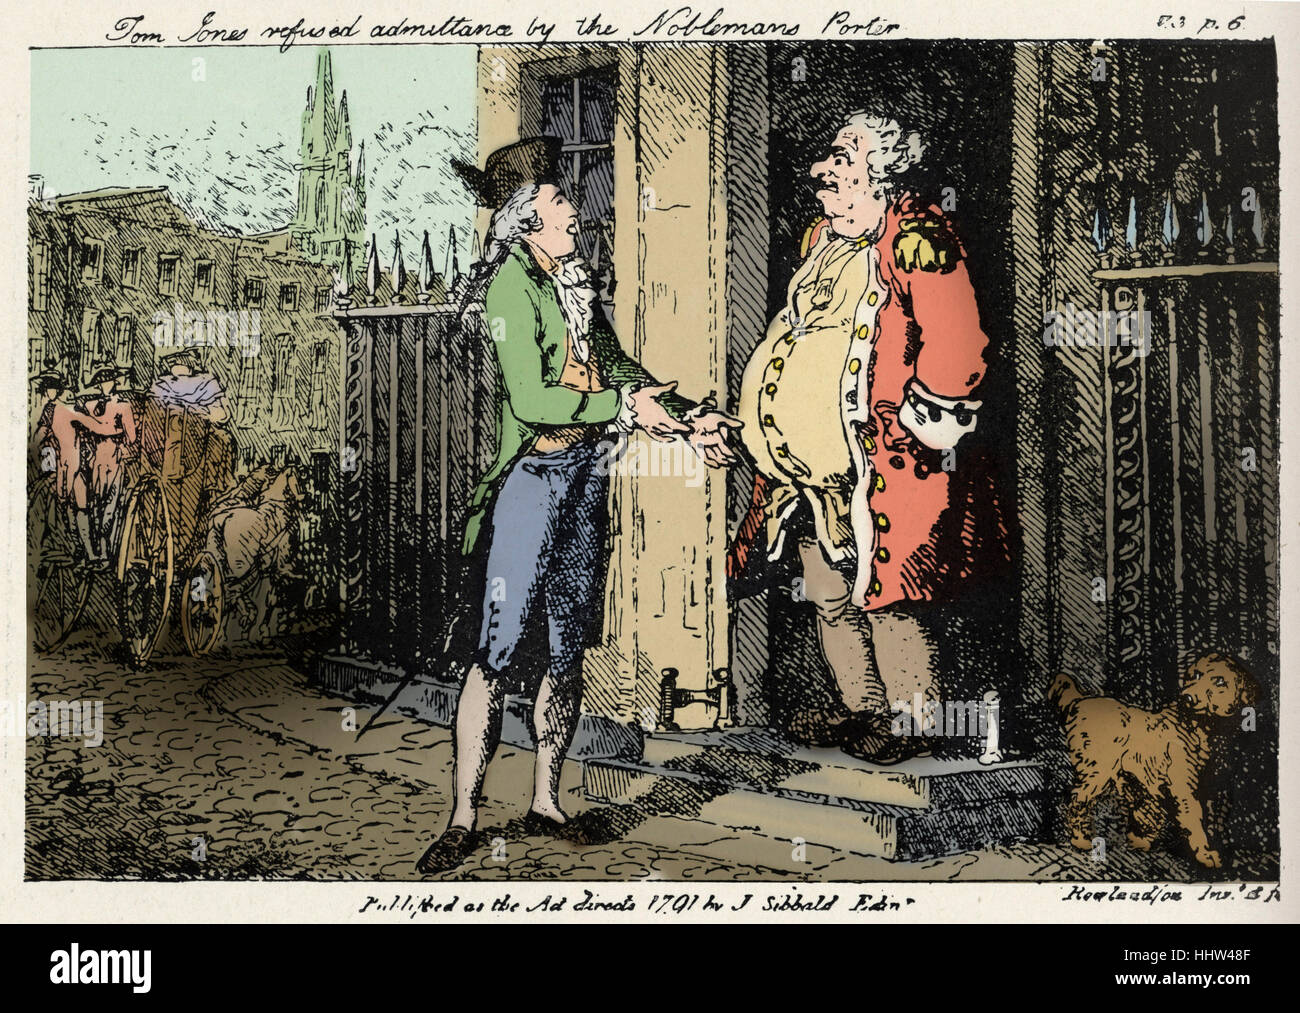 Henry Fielding - 'Tom Jones' - illustration from the book by Thomas Rowlandson, 1791 edition. Caption reads: 'Tom Jones refused Stock Photo